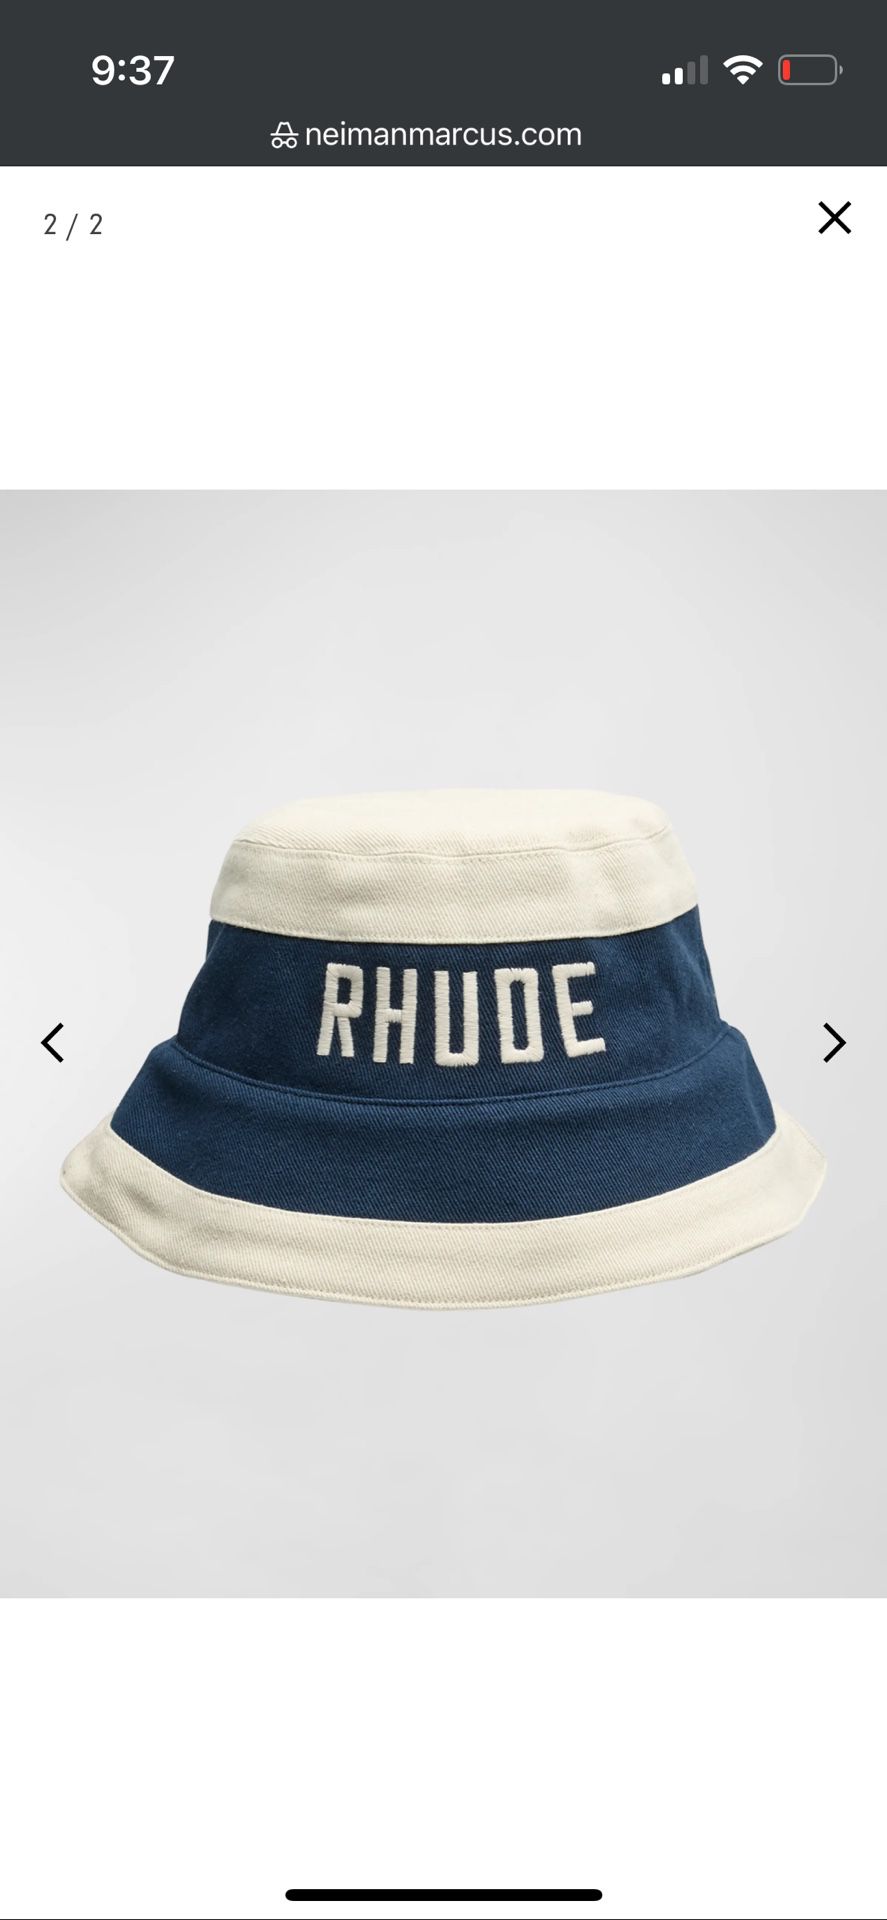 Rhude Bucket Hat Or Offer Trade